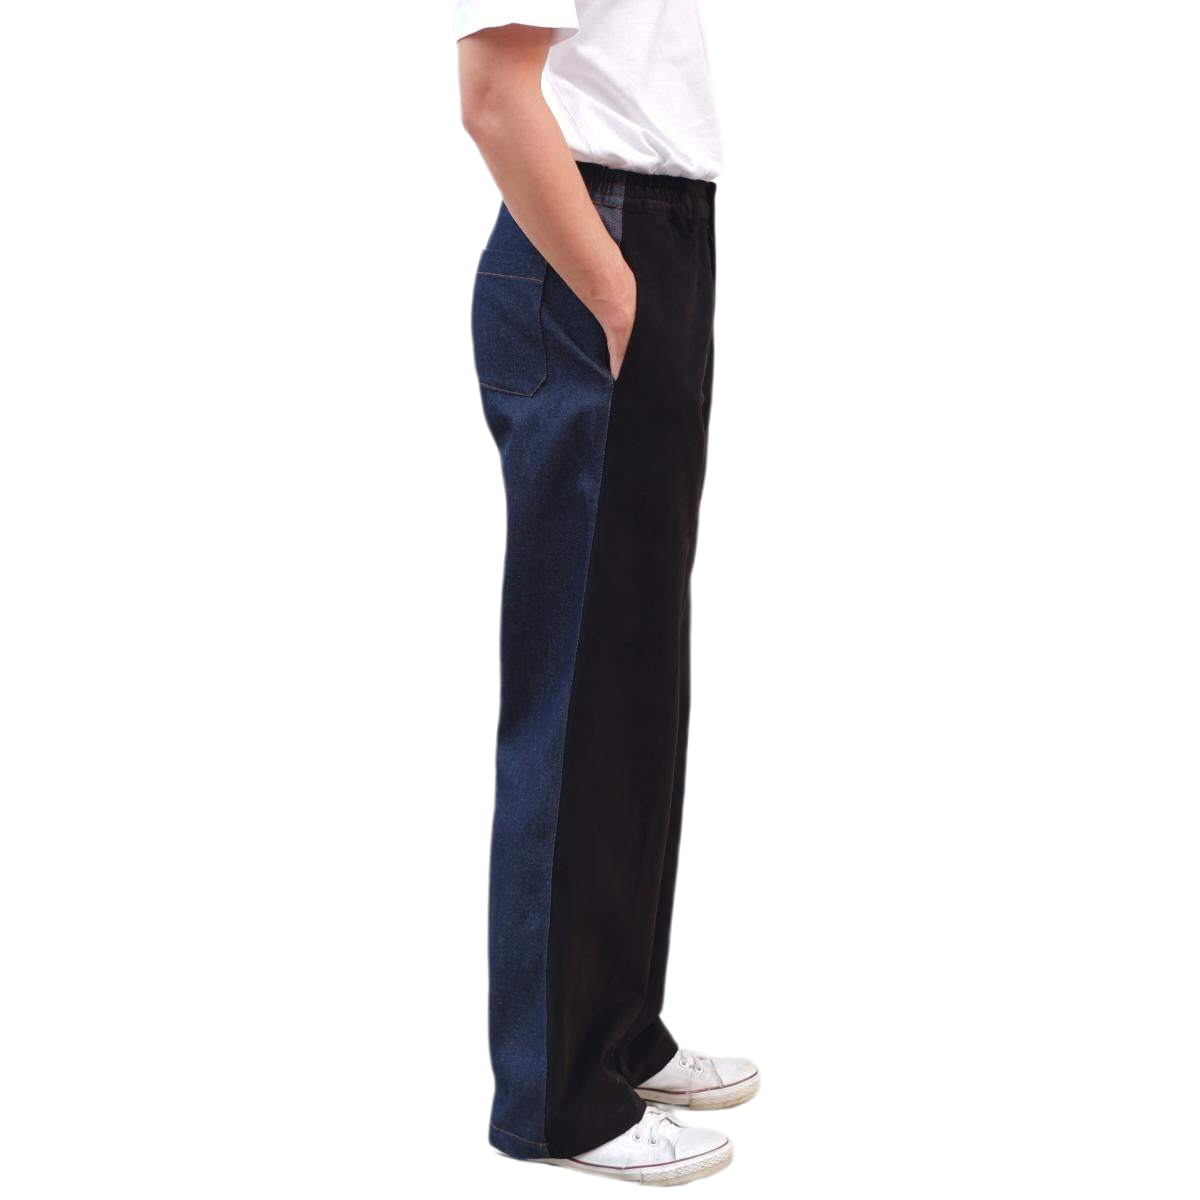 TwoTone Pants (Black-Denim)